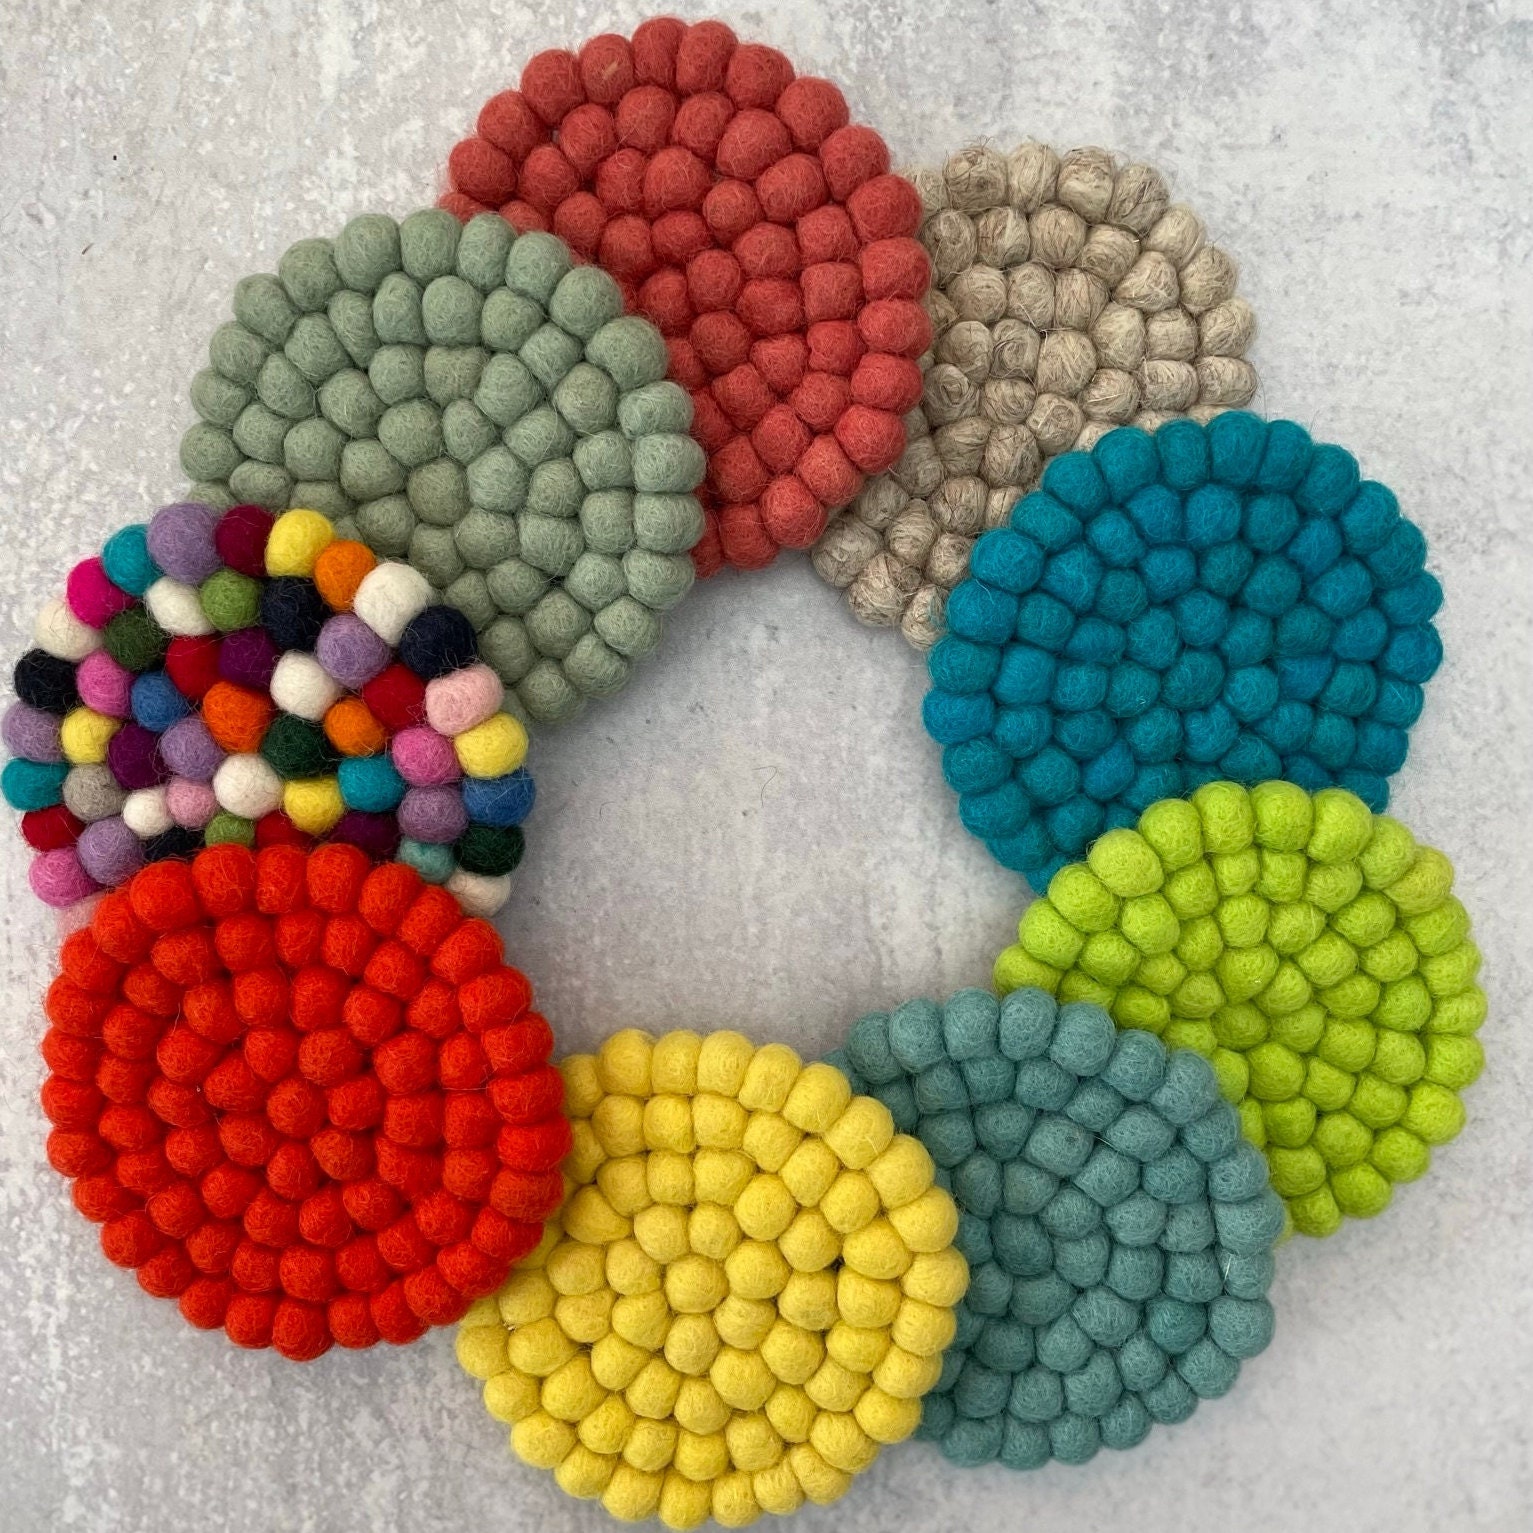 2cm Multi Color Wool Felt Balls Pom Pom Balls Beads Party Decor Coaster  Craft 10pcs A Pack 